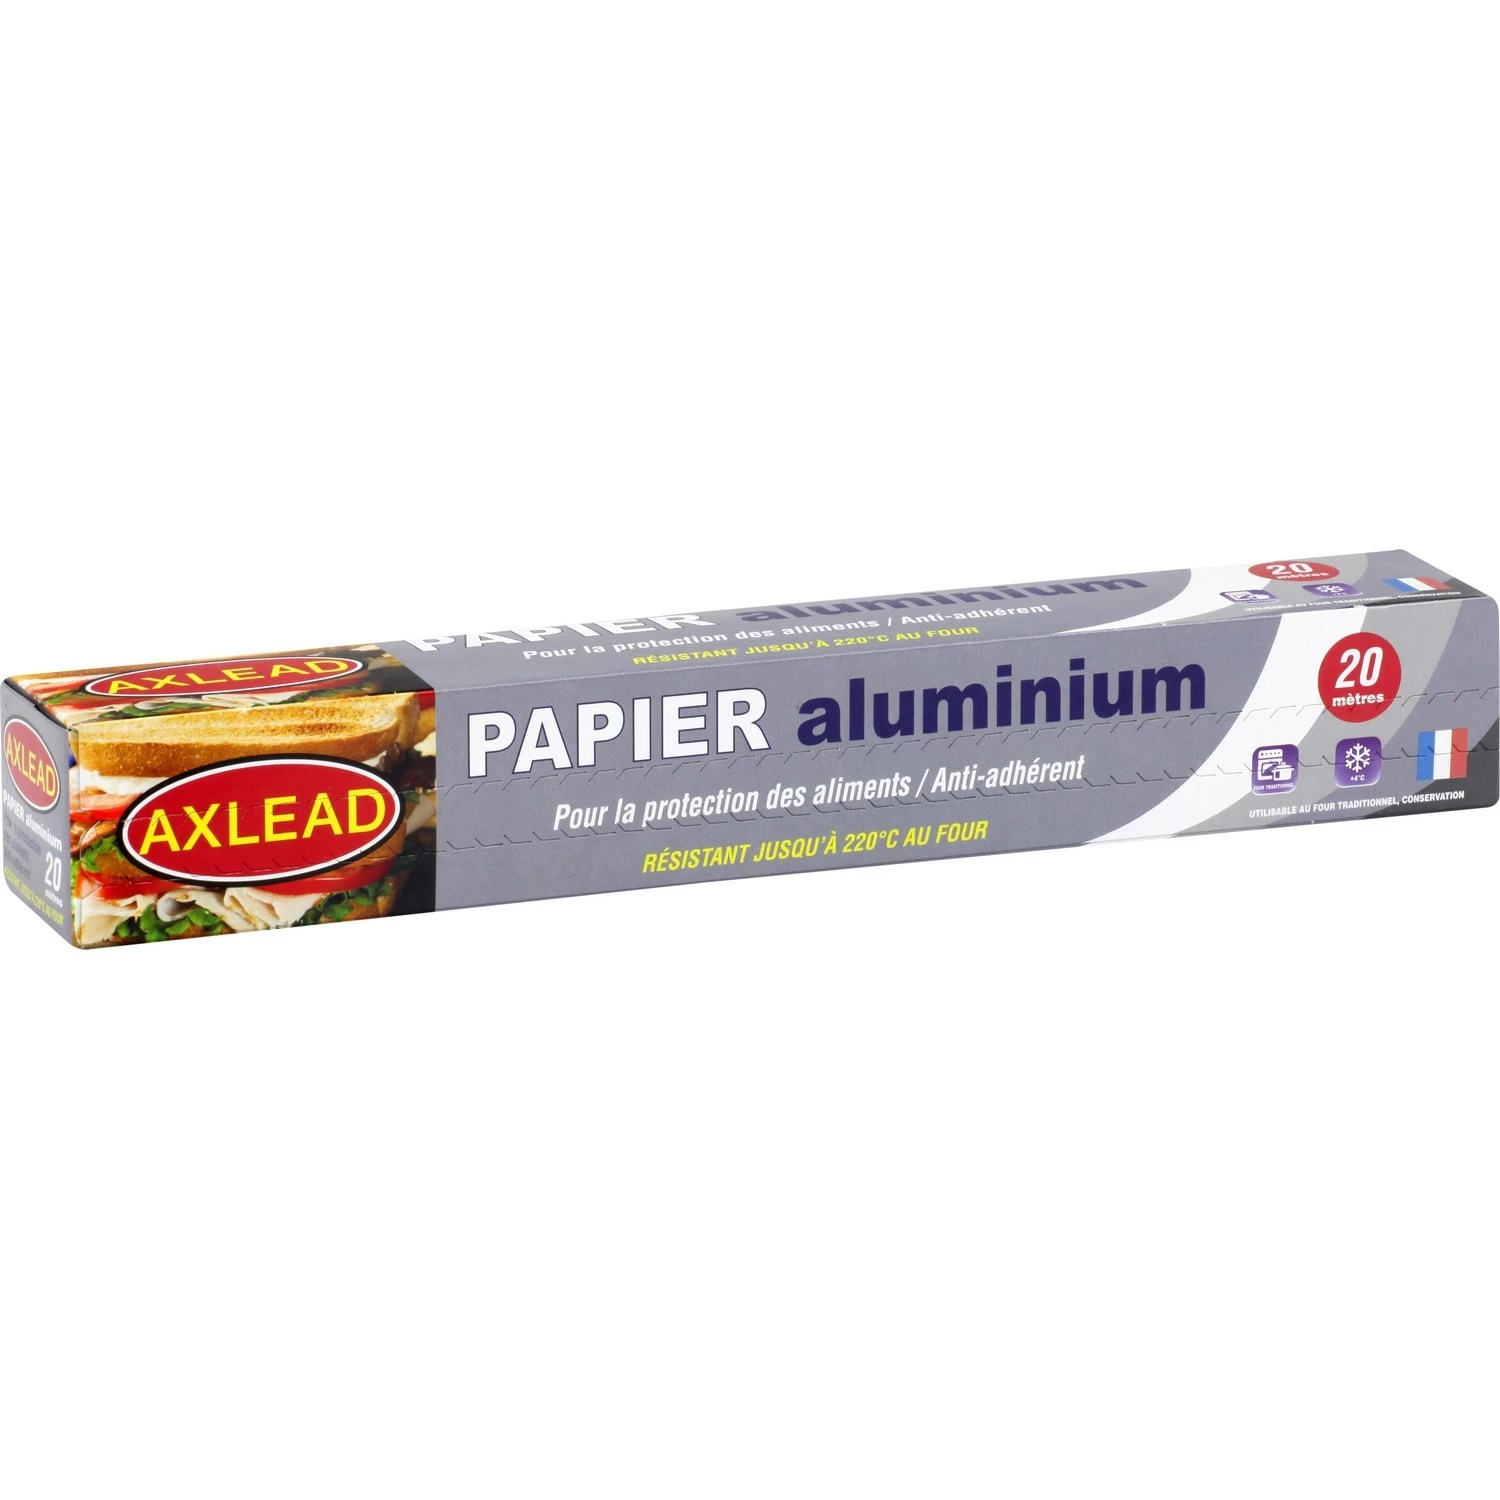 Papier aluminium 20m - AXLEAD